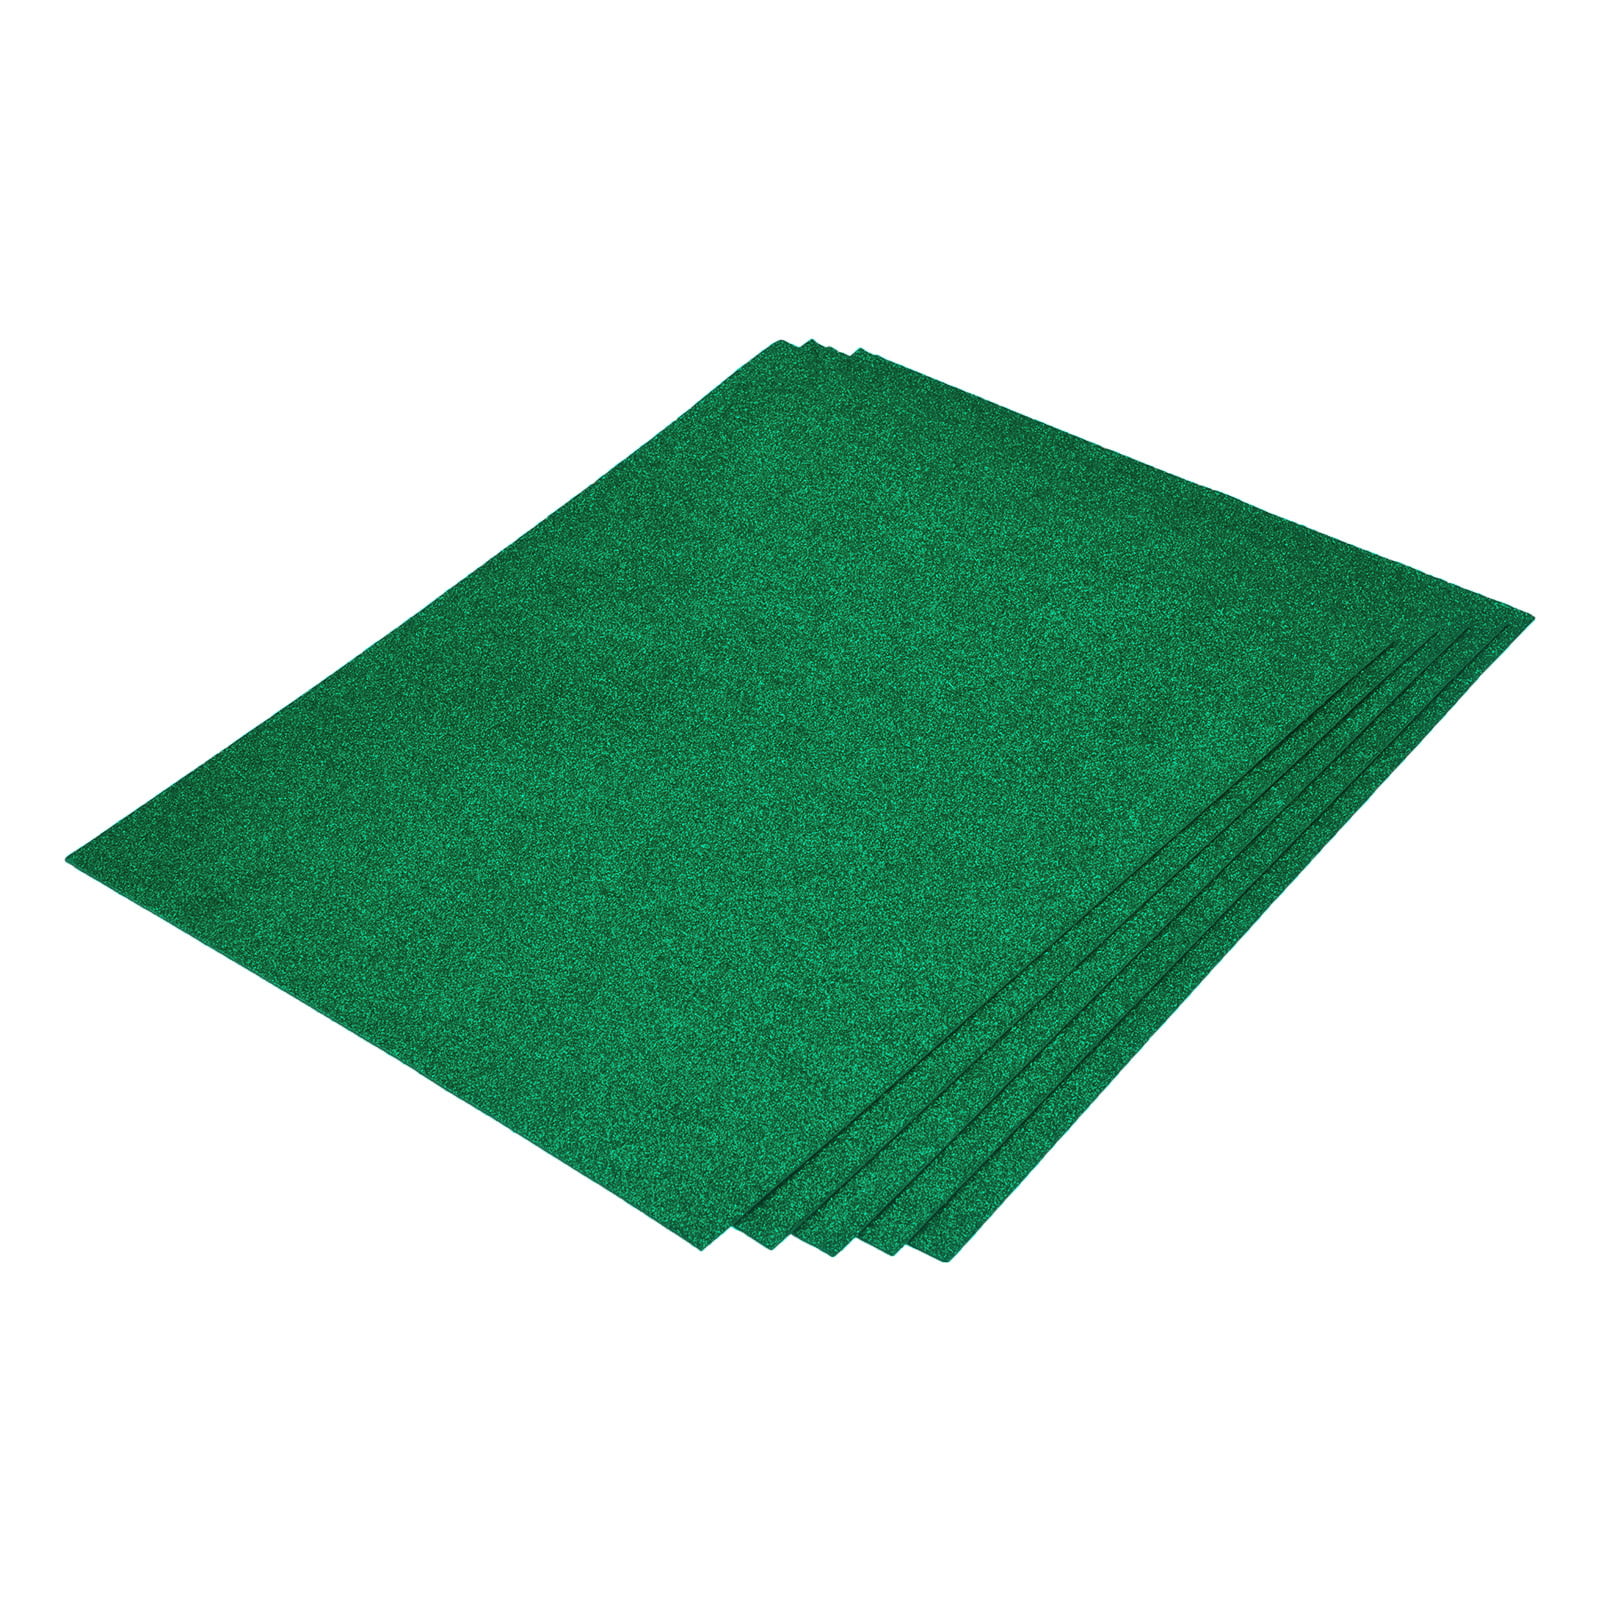 Foam Padding Sheet 1/4 Thick with Adhesive,Adhesive Foam Pad